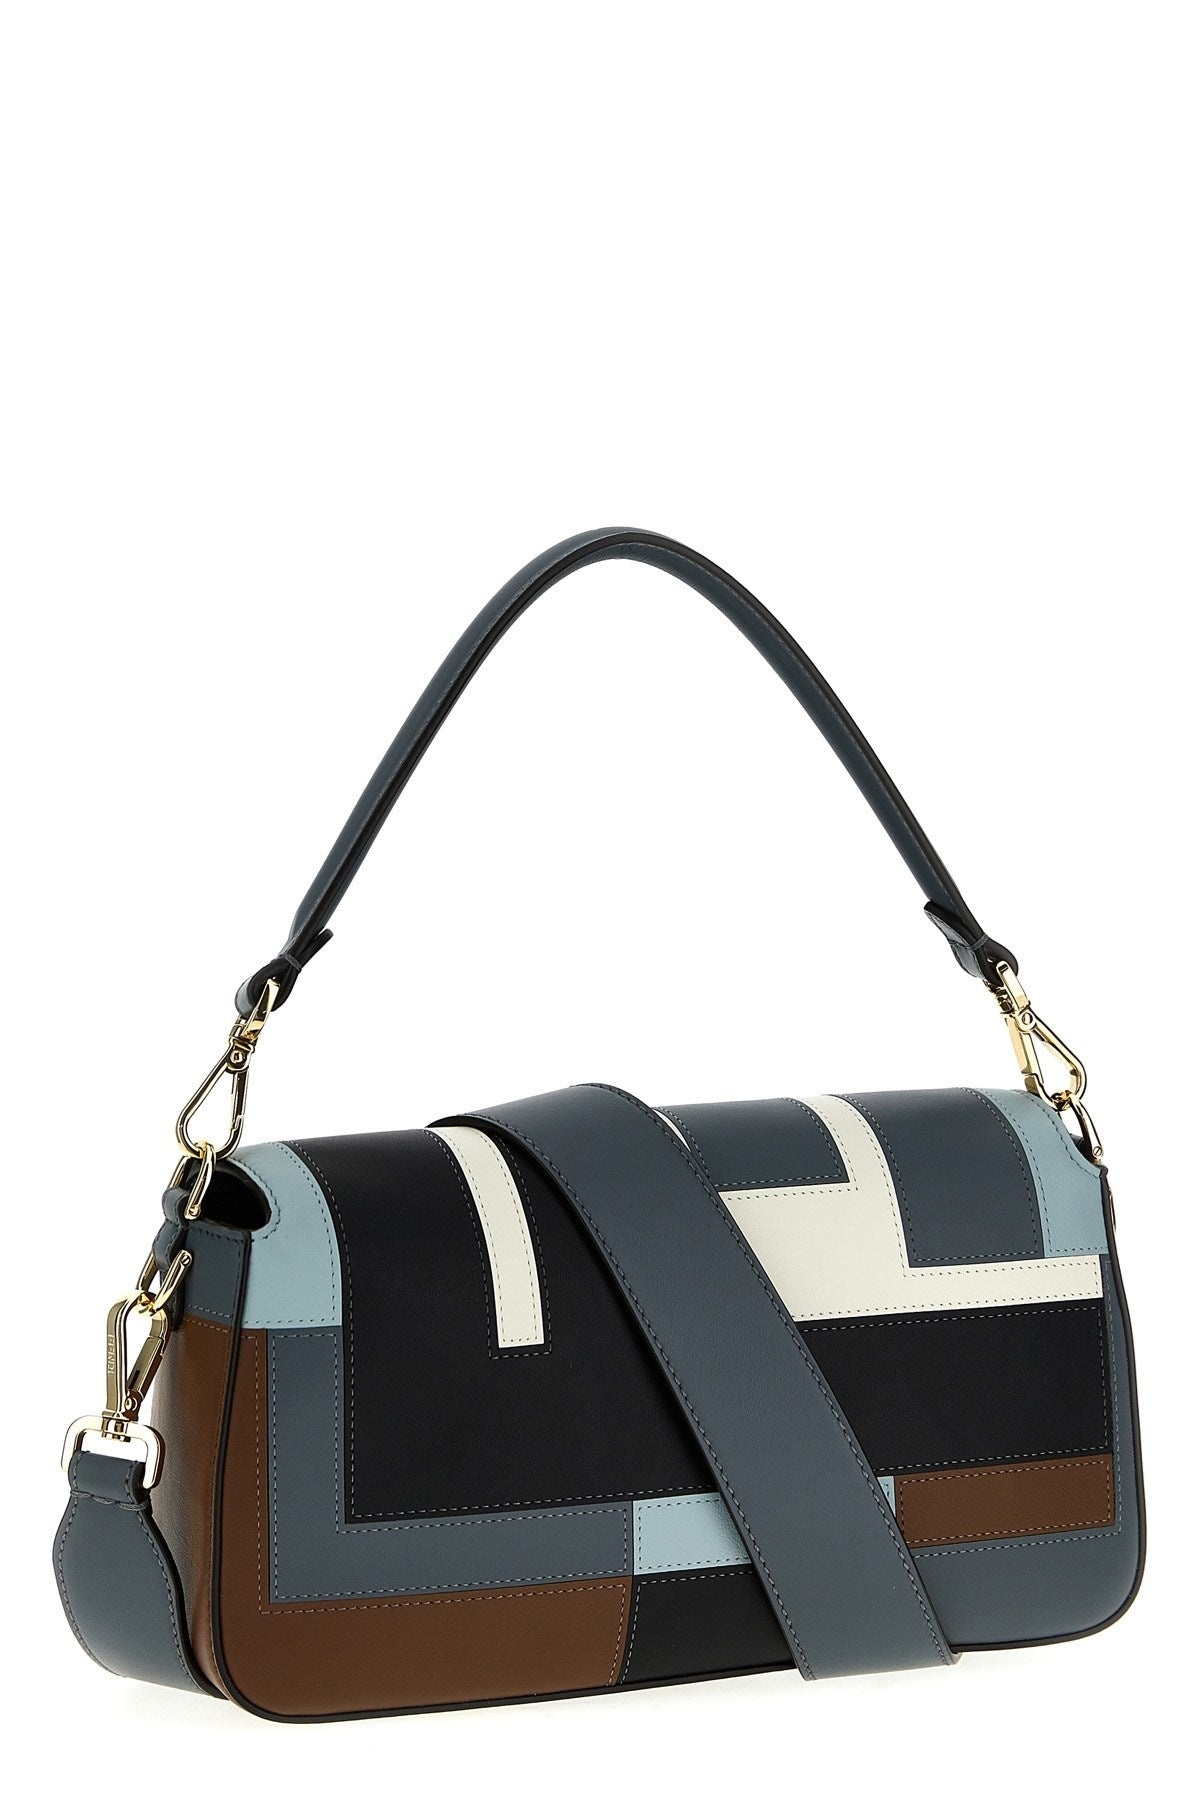 Fendi Women 'Baguette' Midi Handbag - 2